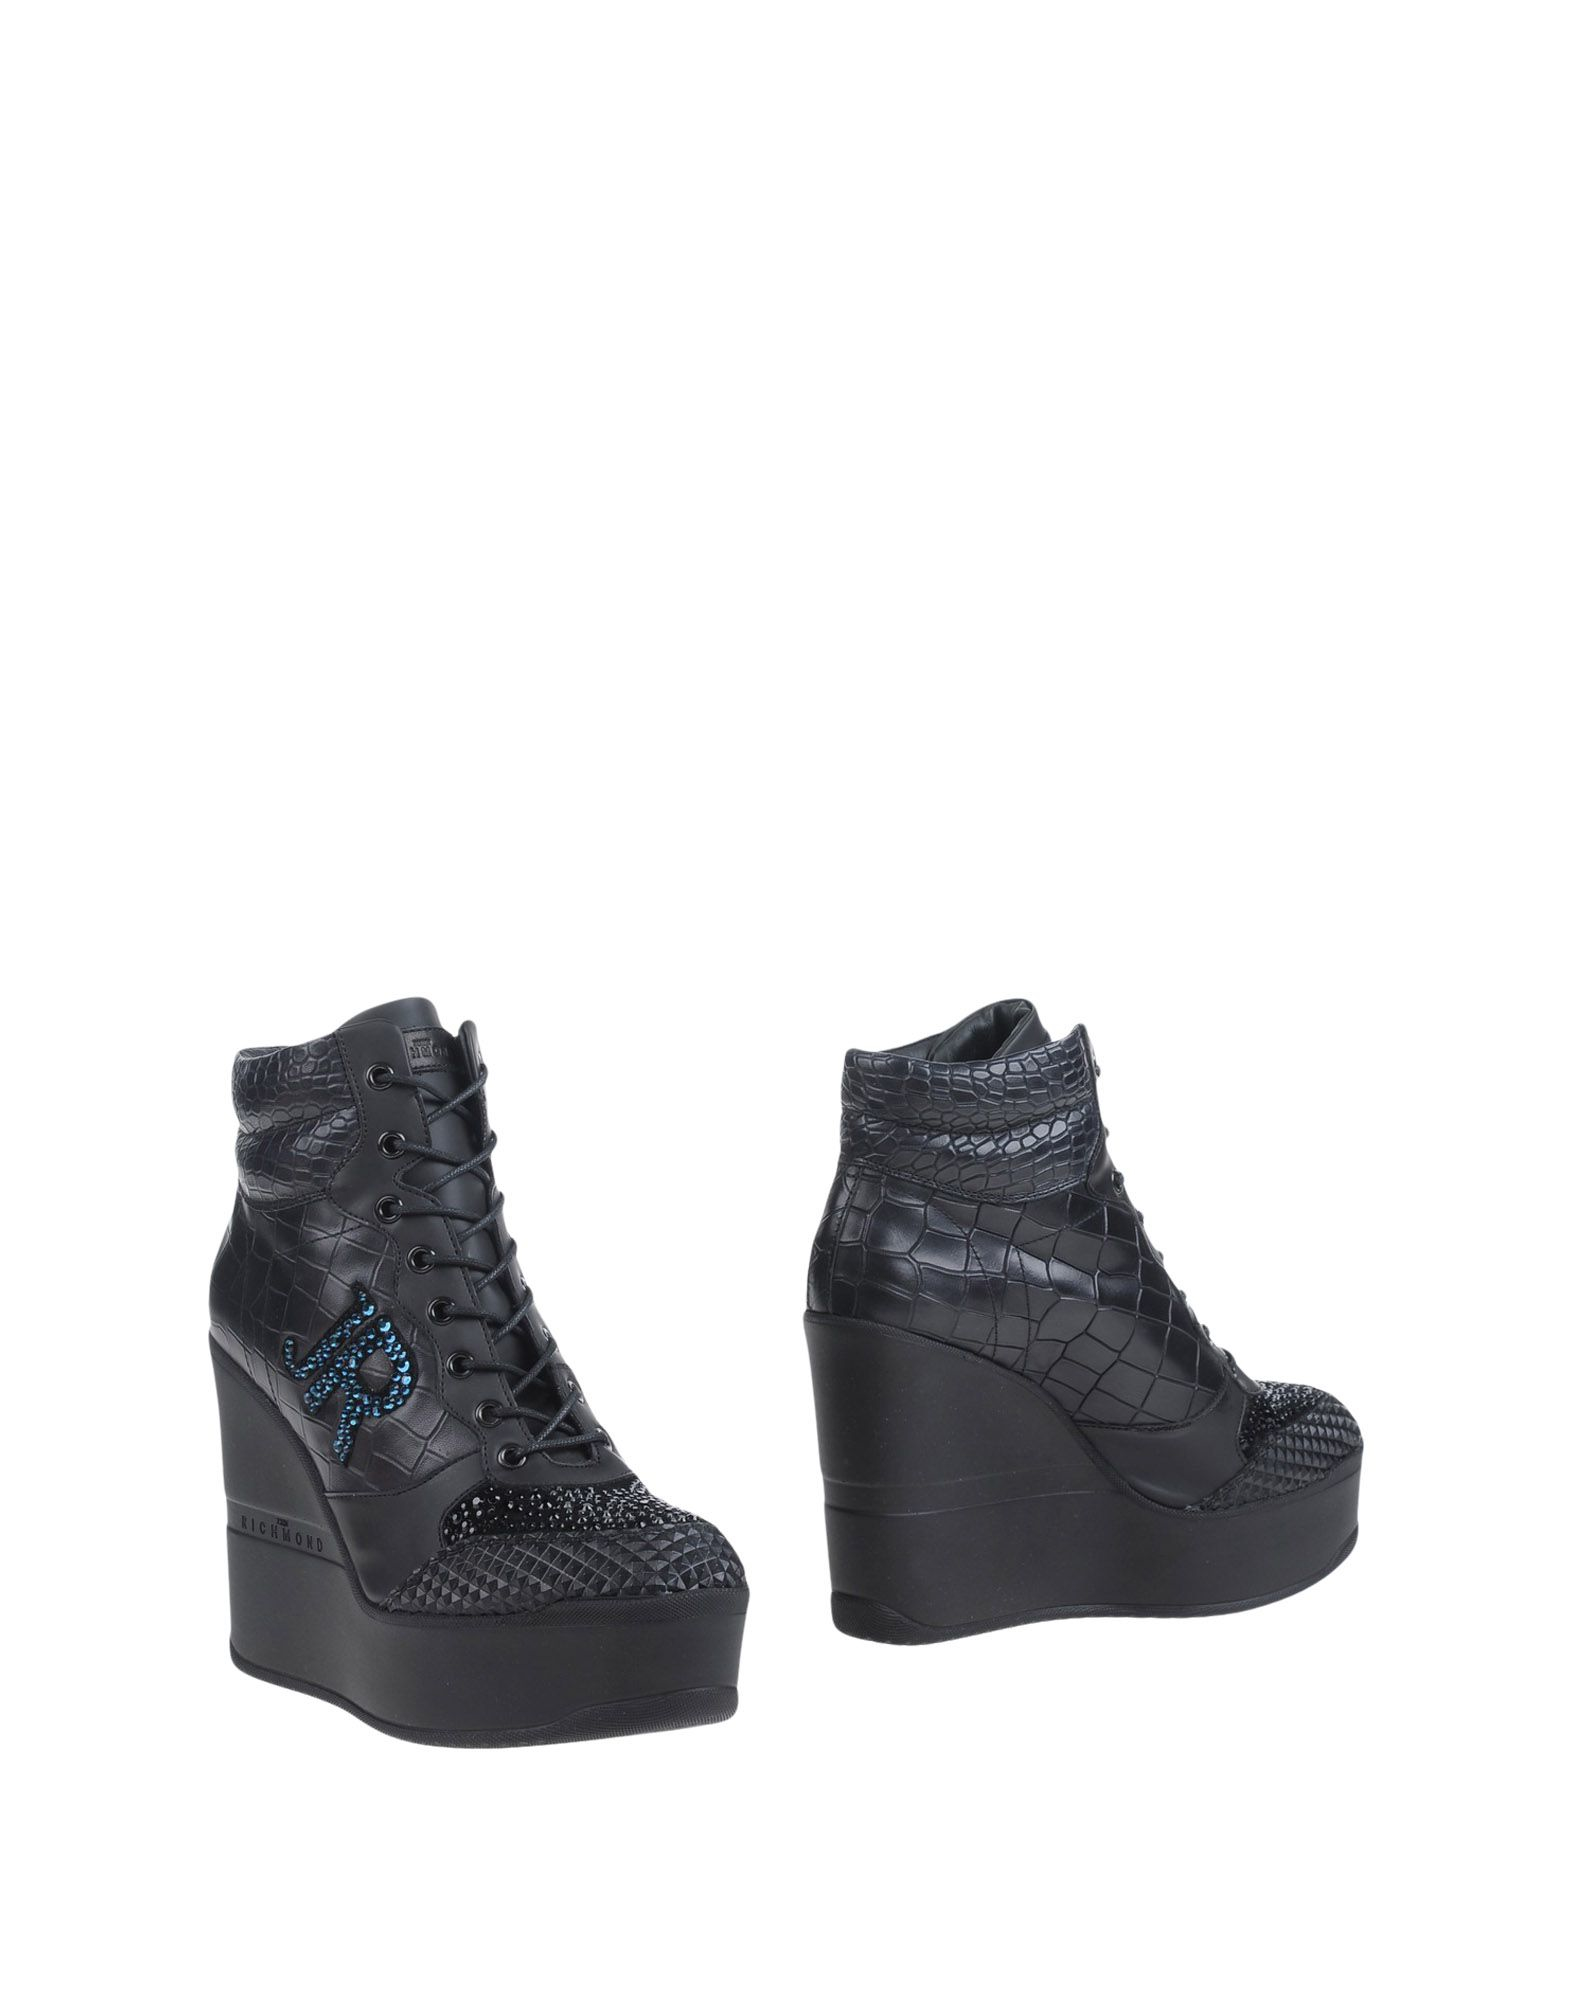 John richmond Ankle Boots in Black | Lyst